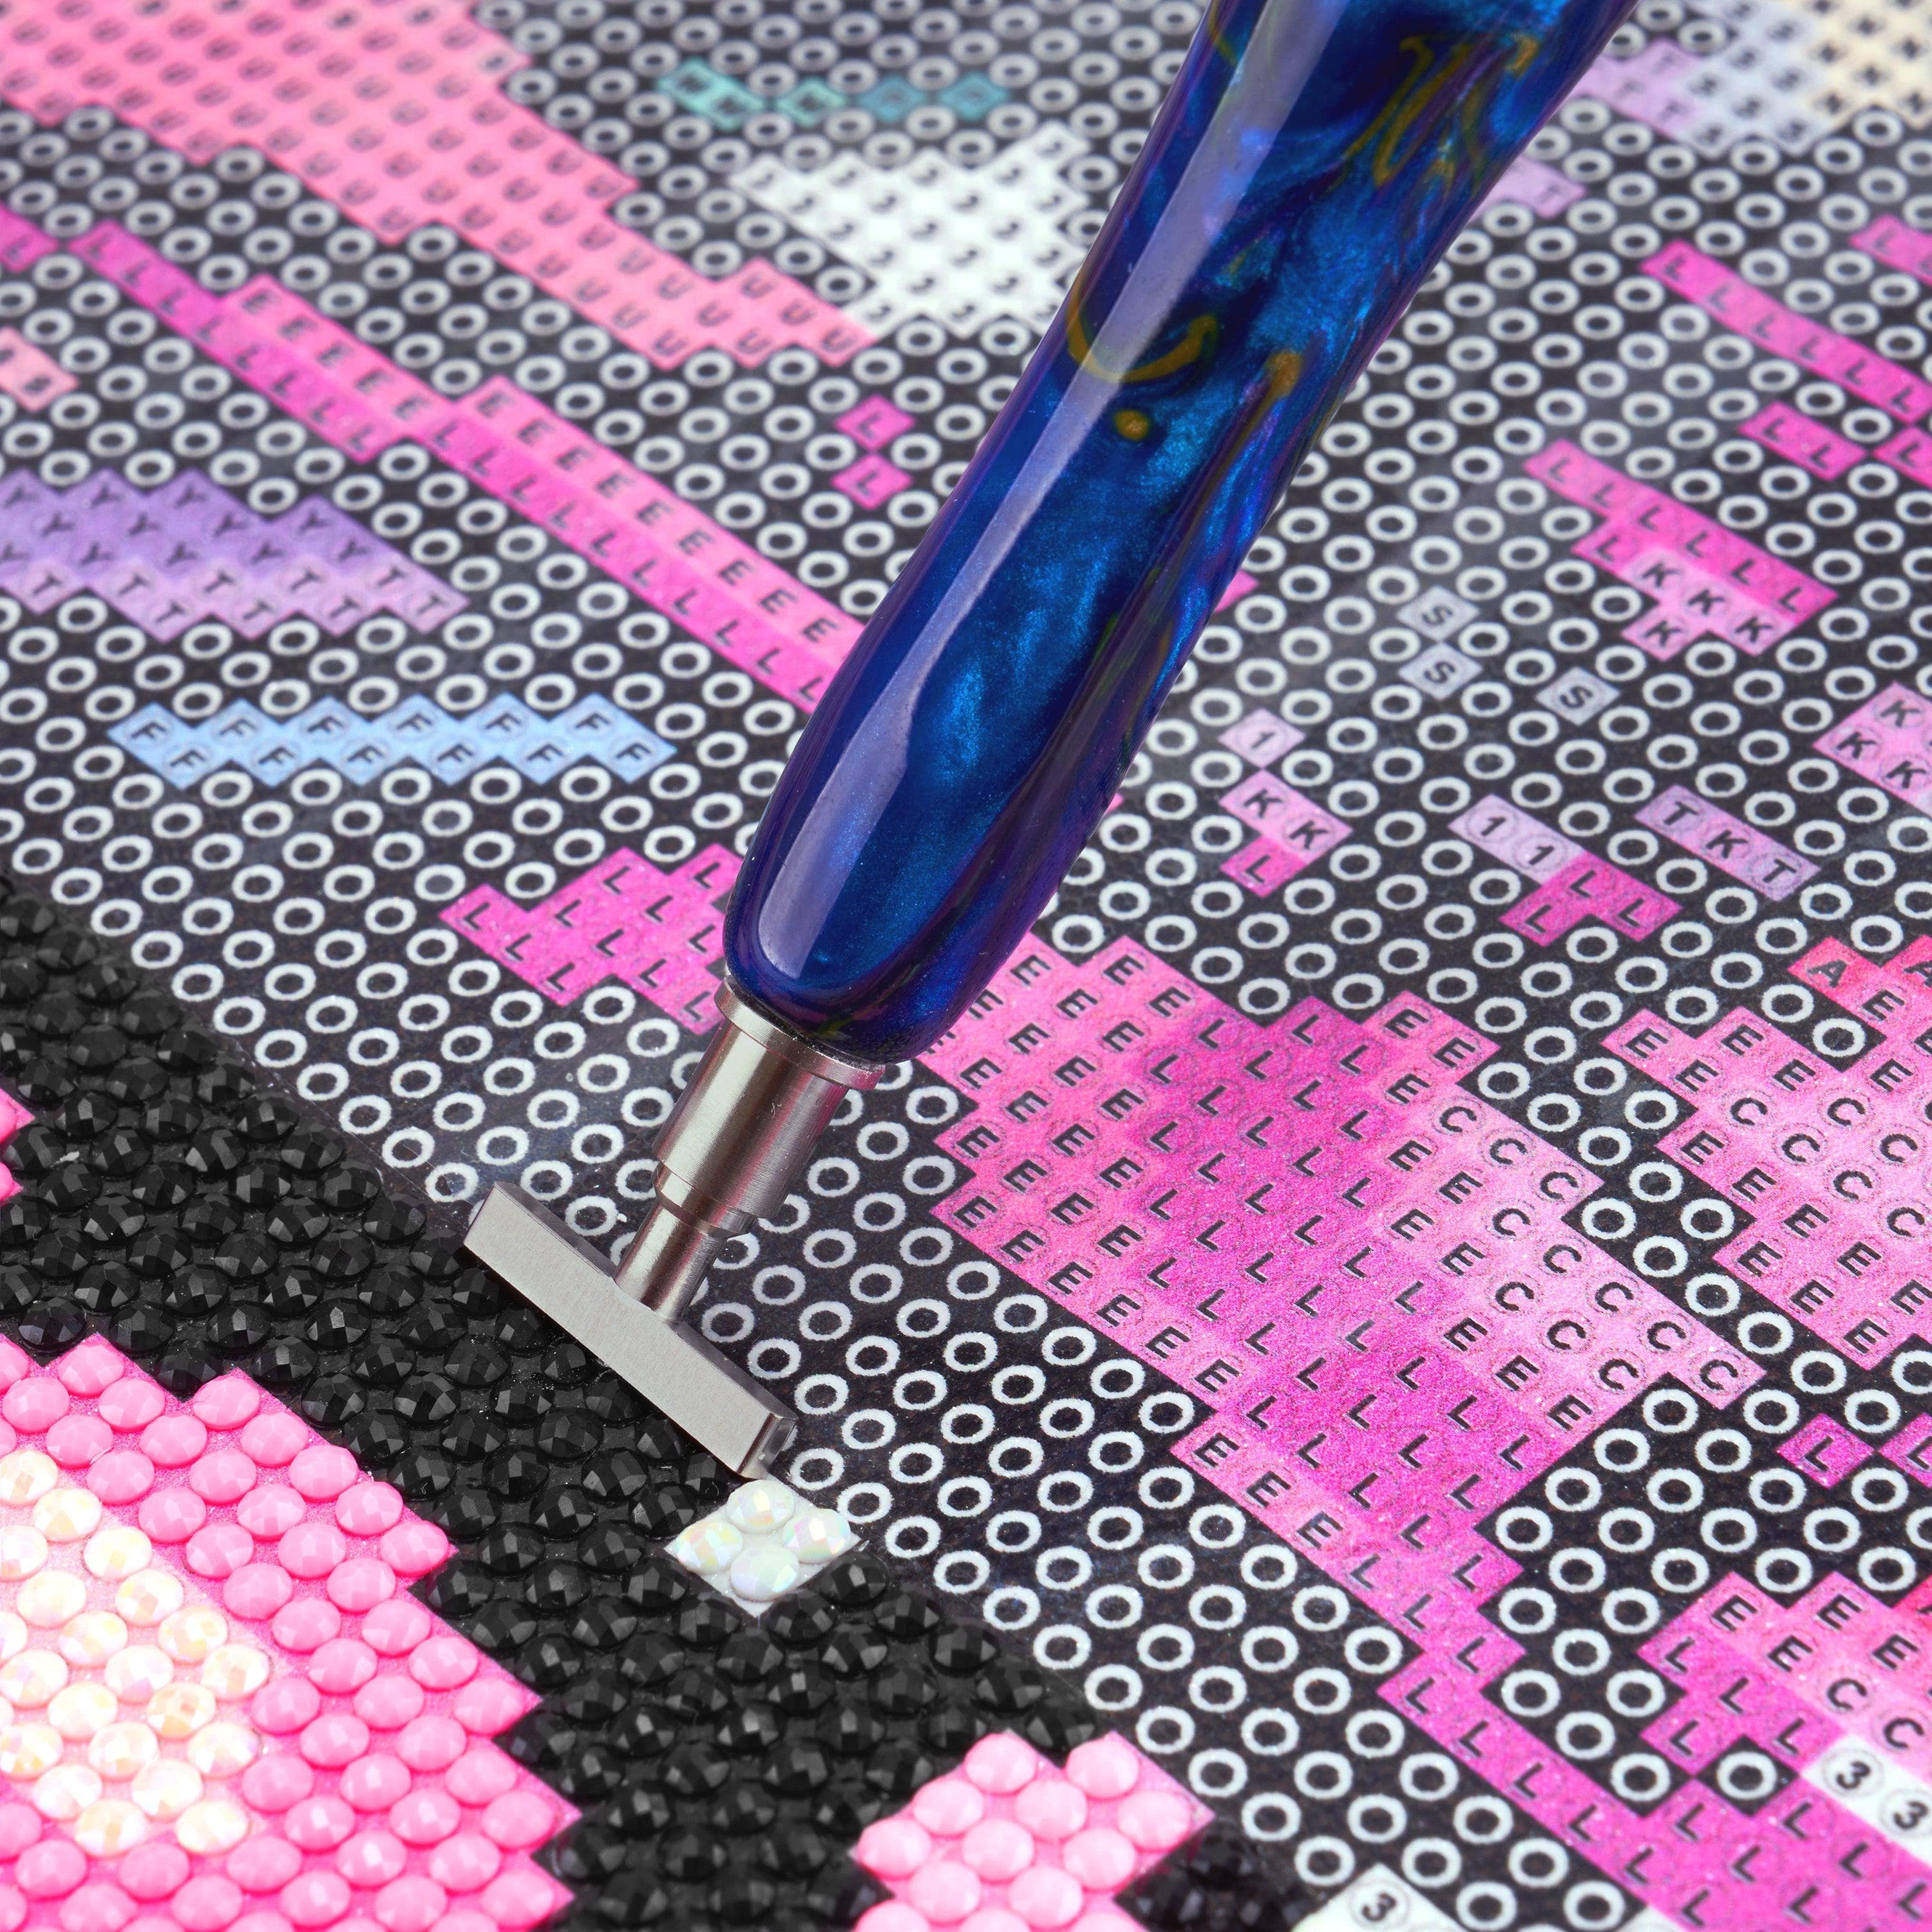 Diamond Painting Pen Accessories Tools Set,1PCS Luminous Diamond Art Pen  and 6Pcs Rose Gold Metal Screw Thread Multi Placer Tips,Diamond Painting